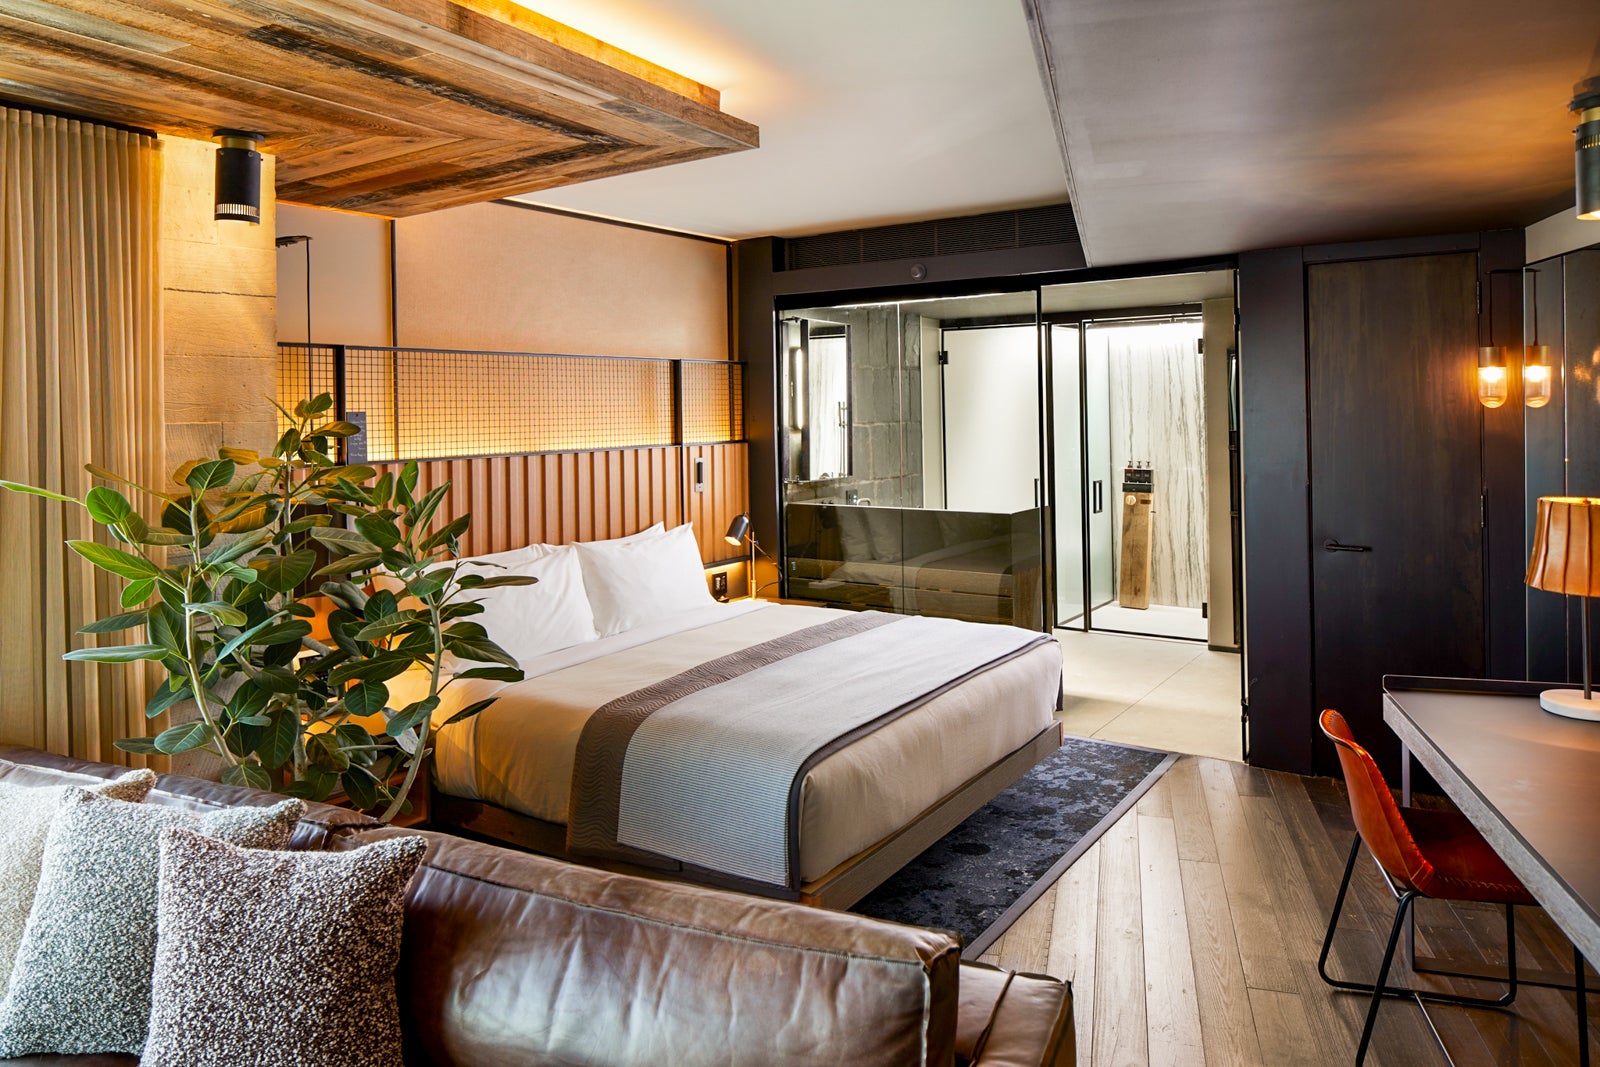 Buy Luxury Hotel Bedding from Marriott Hotels - Minimalist Wall-Mount Vanity  Mirror